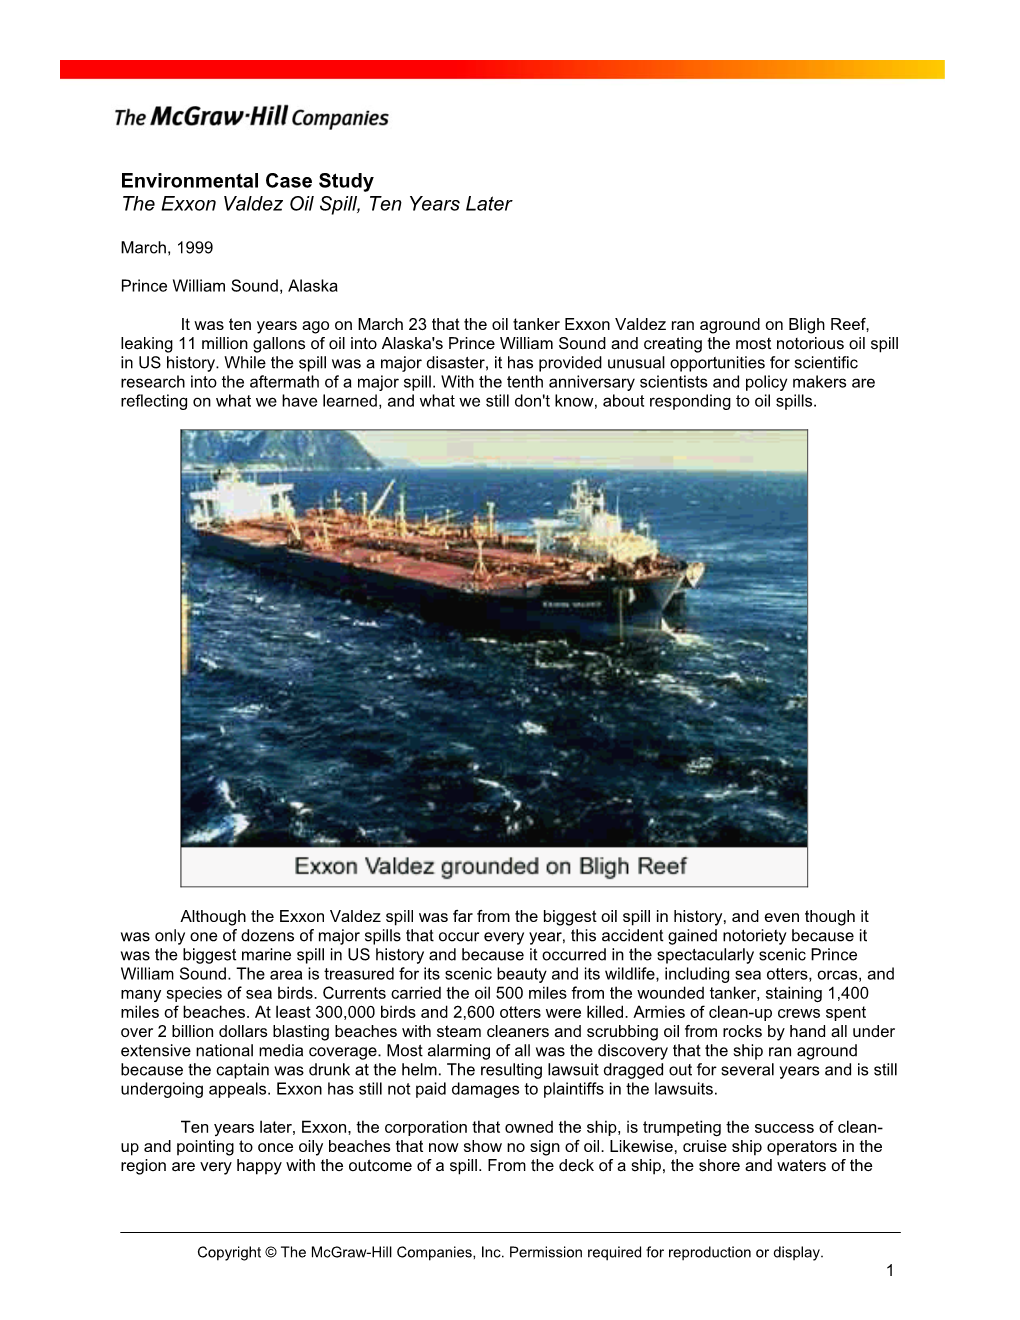 Environmental Case Study the Exxon Valdez Oil Spill, Ten Years Later